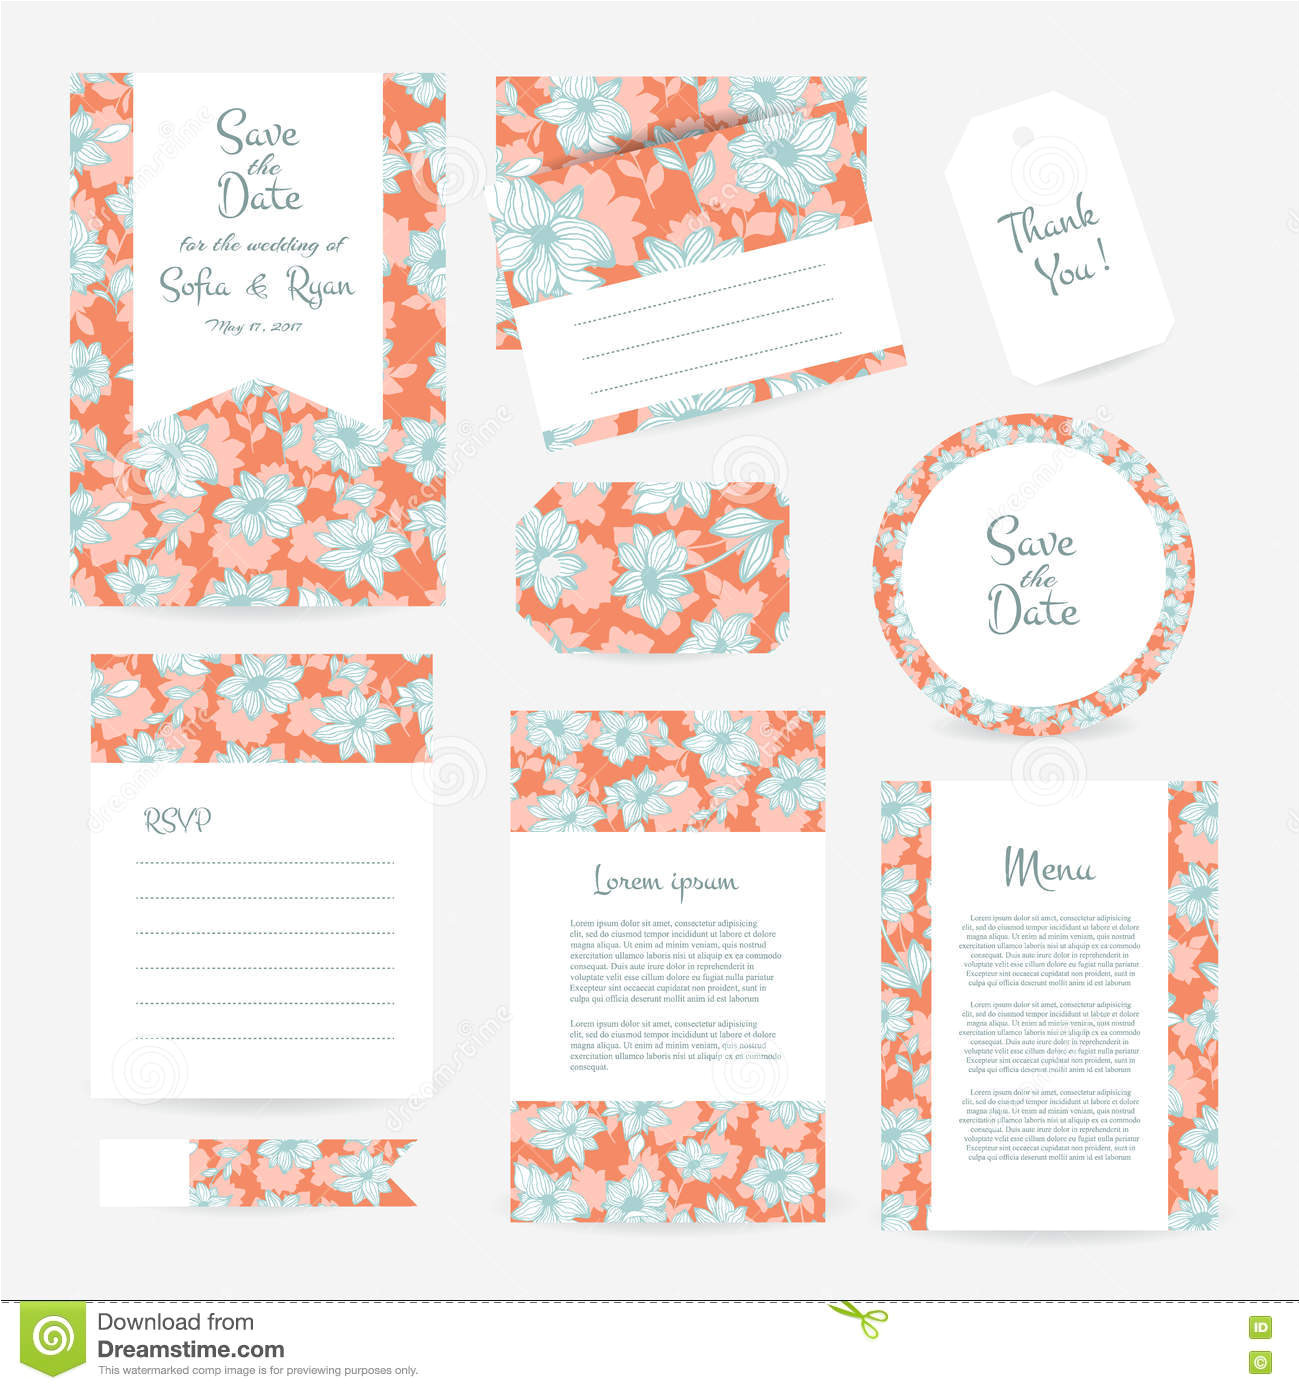 vector gentle wedding cards template flower design invitation save date rsvp menu thank you card 79169060 jpg